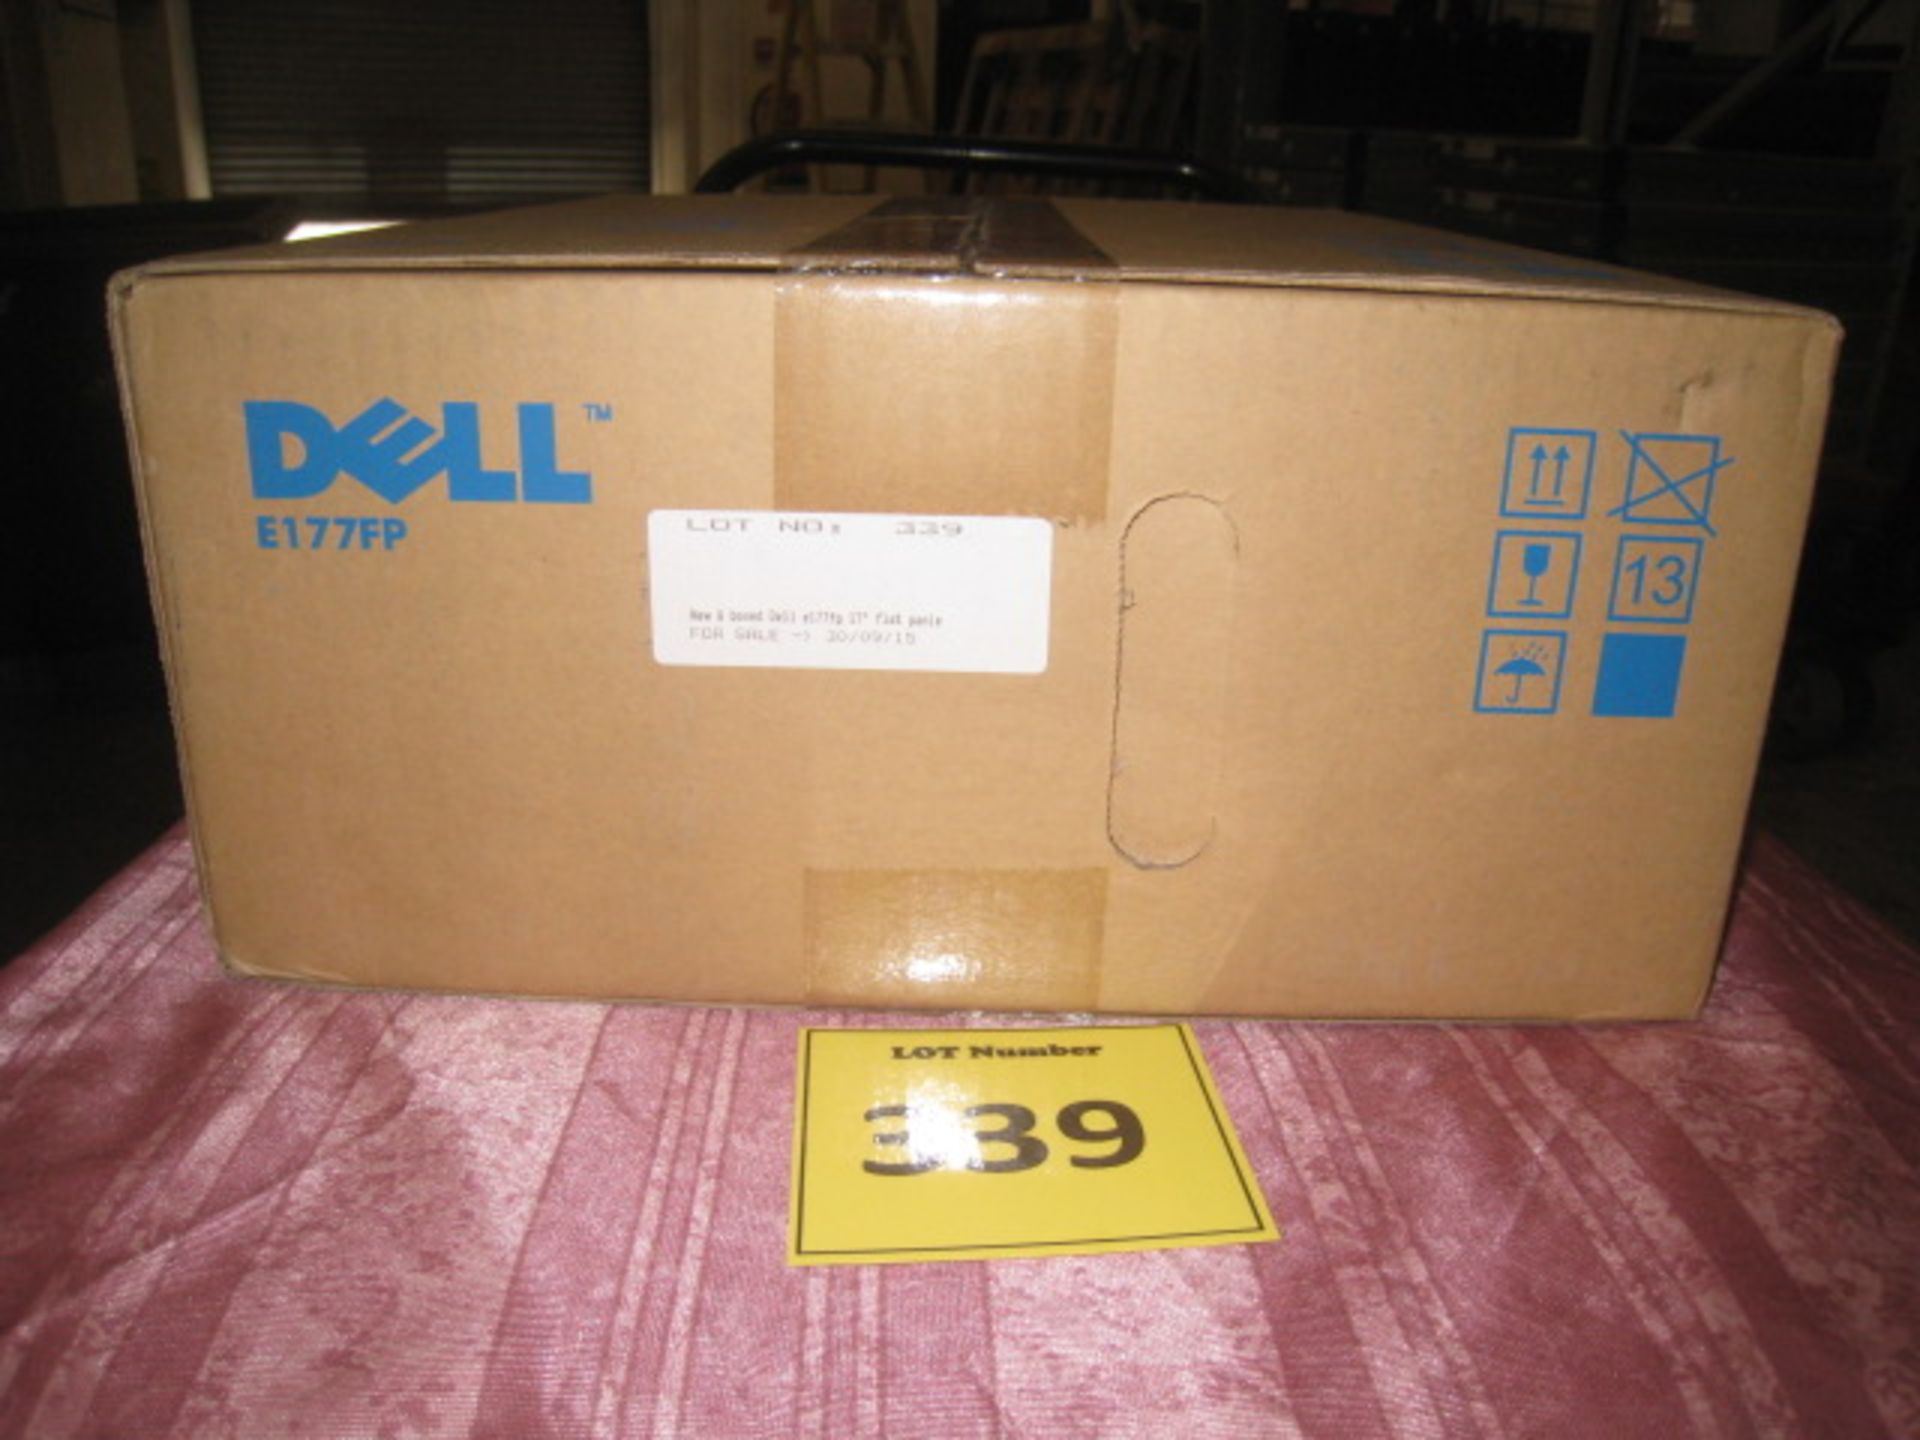 New & boxed Dell e177fp 17" flat panel monitor